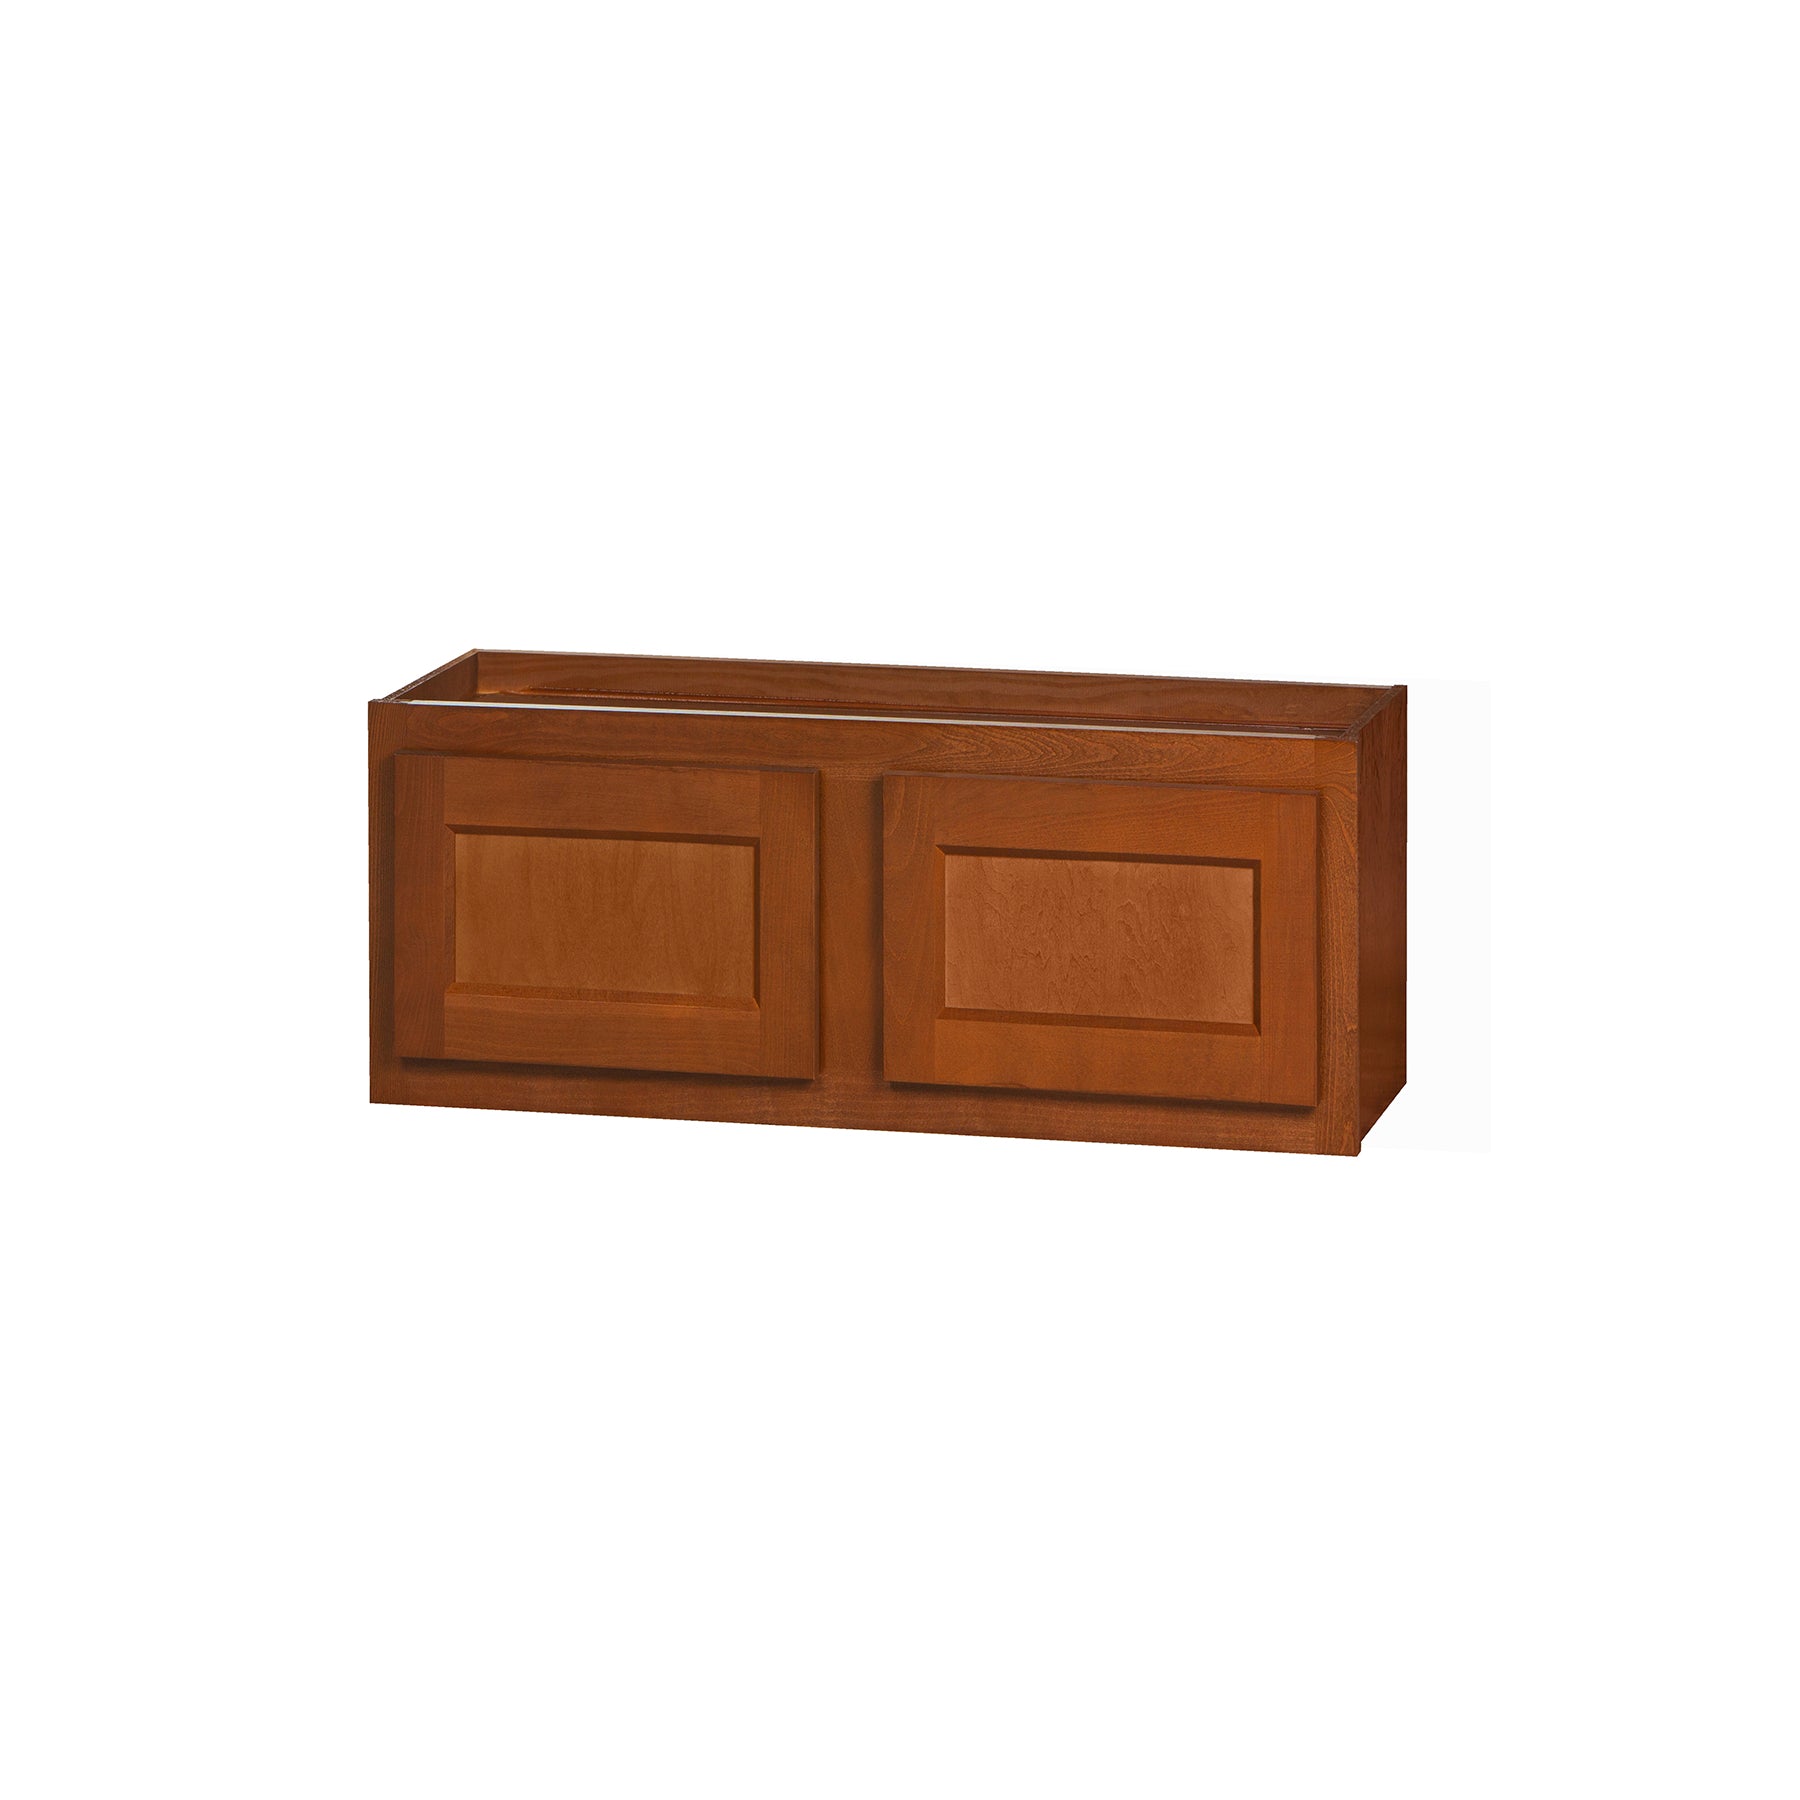 12 inch Wall Cabinets - Glenwood Shaker - 30 Inch W x 12 Inch H x 12 Inch D